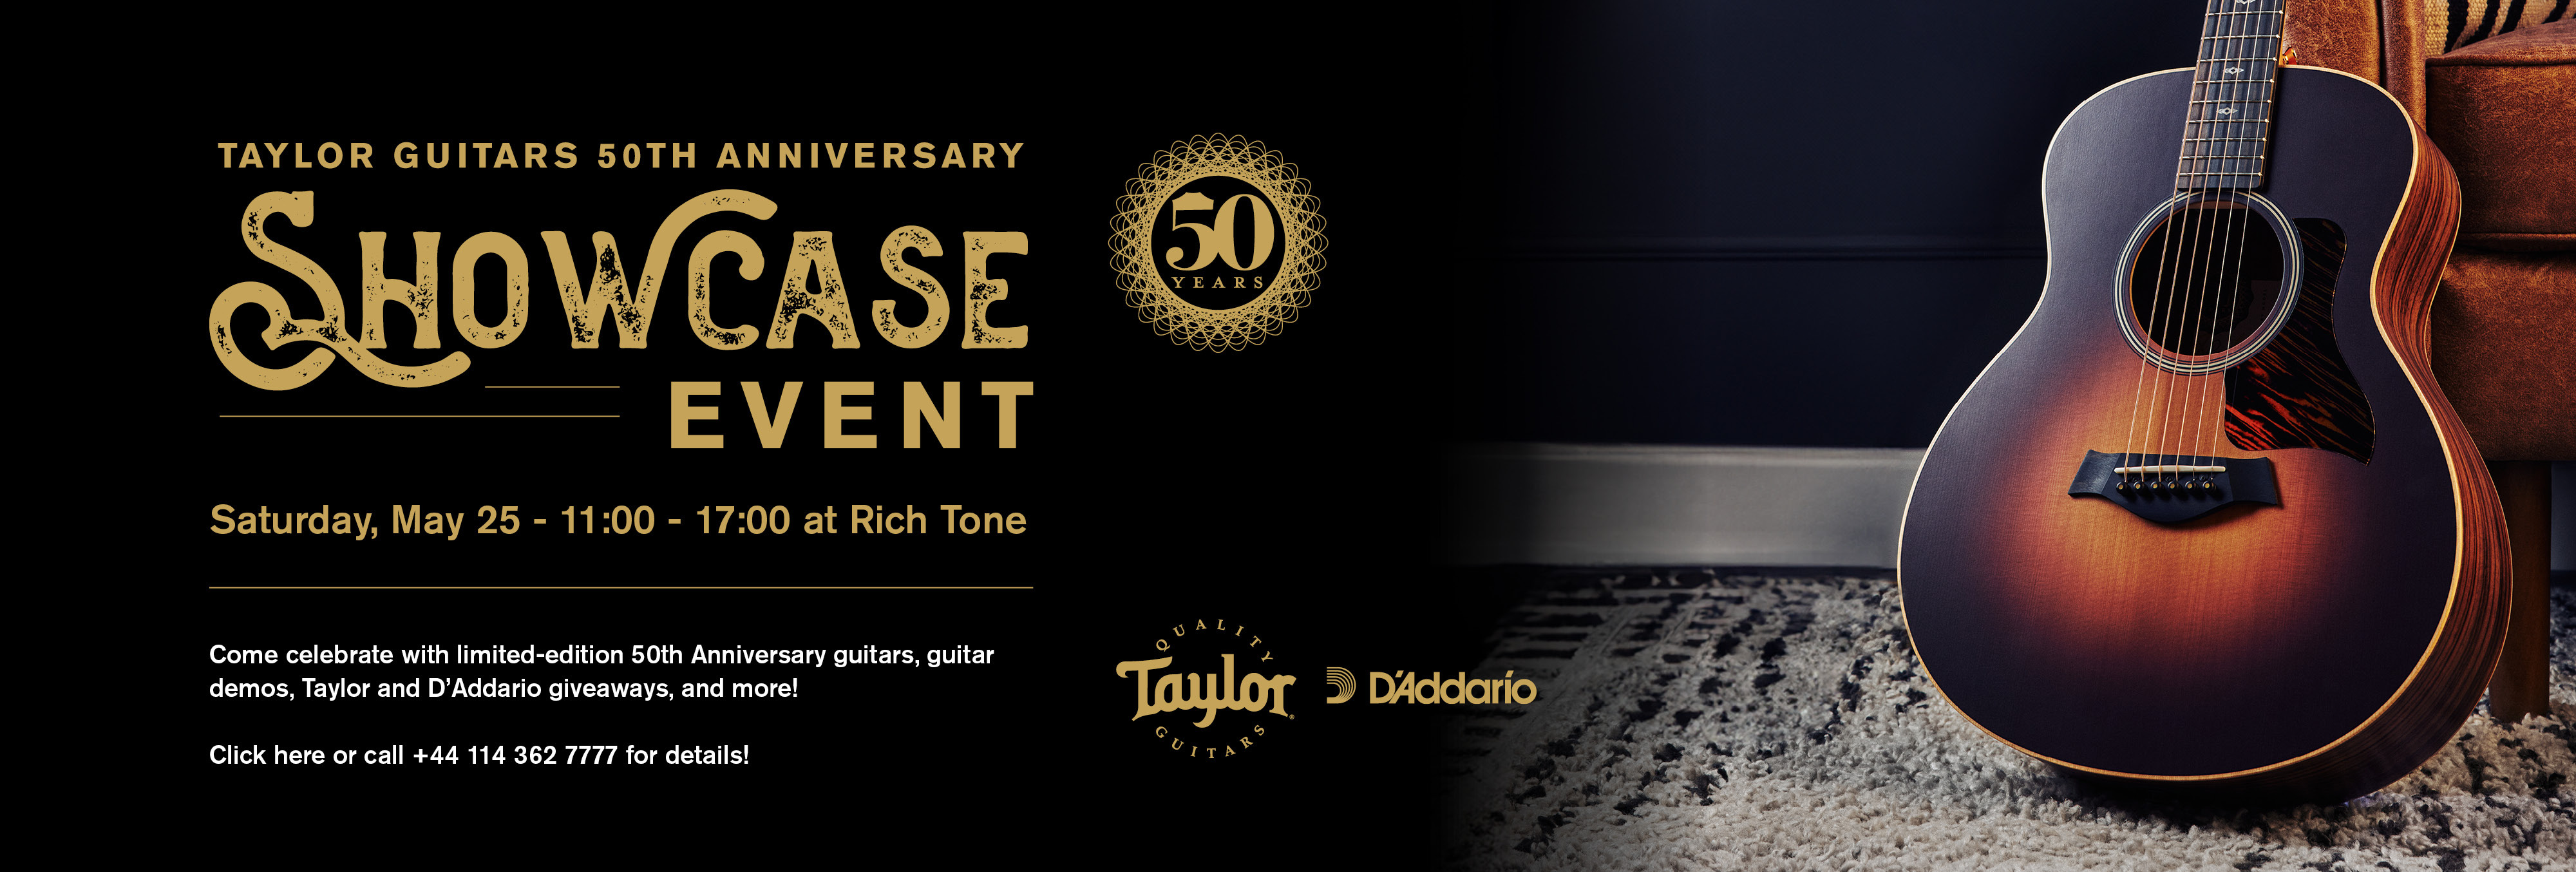 Taylor 50th Anniversary Showcase Event - Rich Tone Music